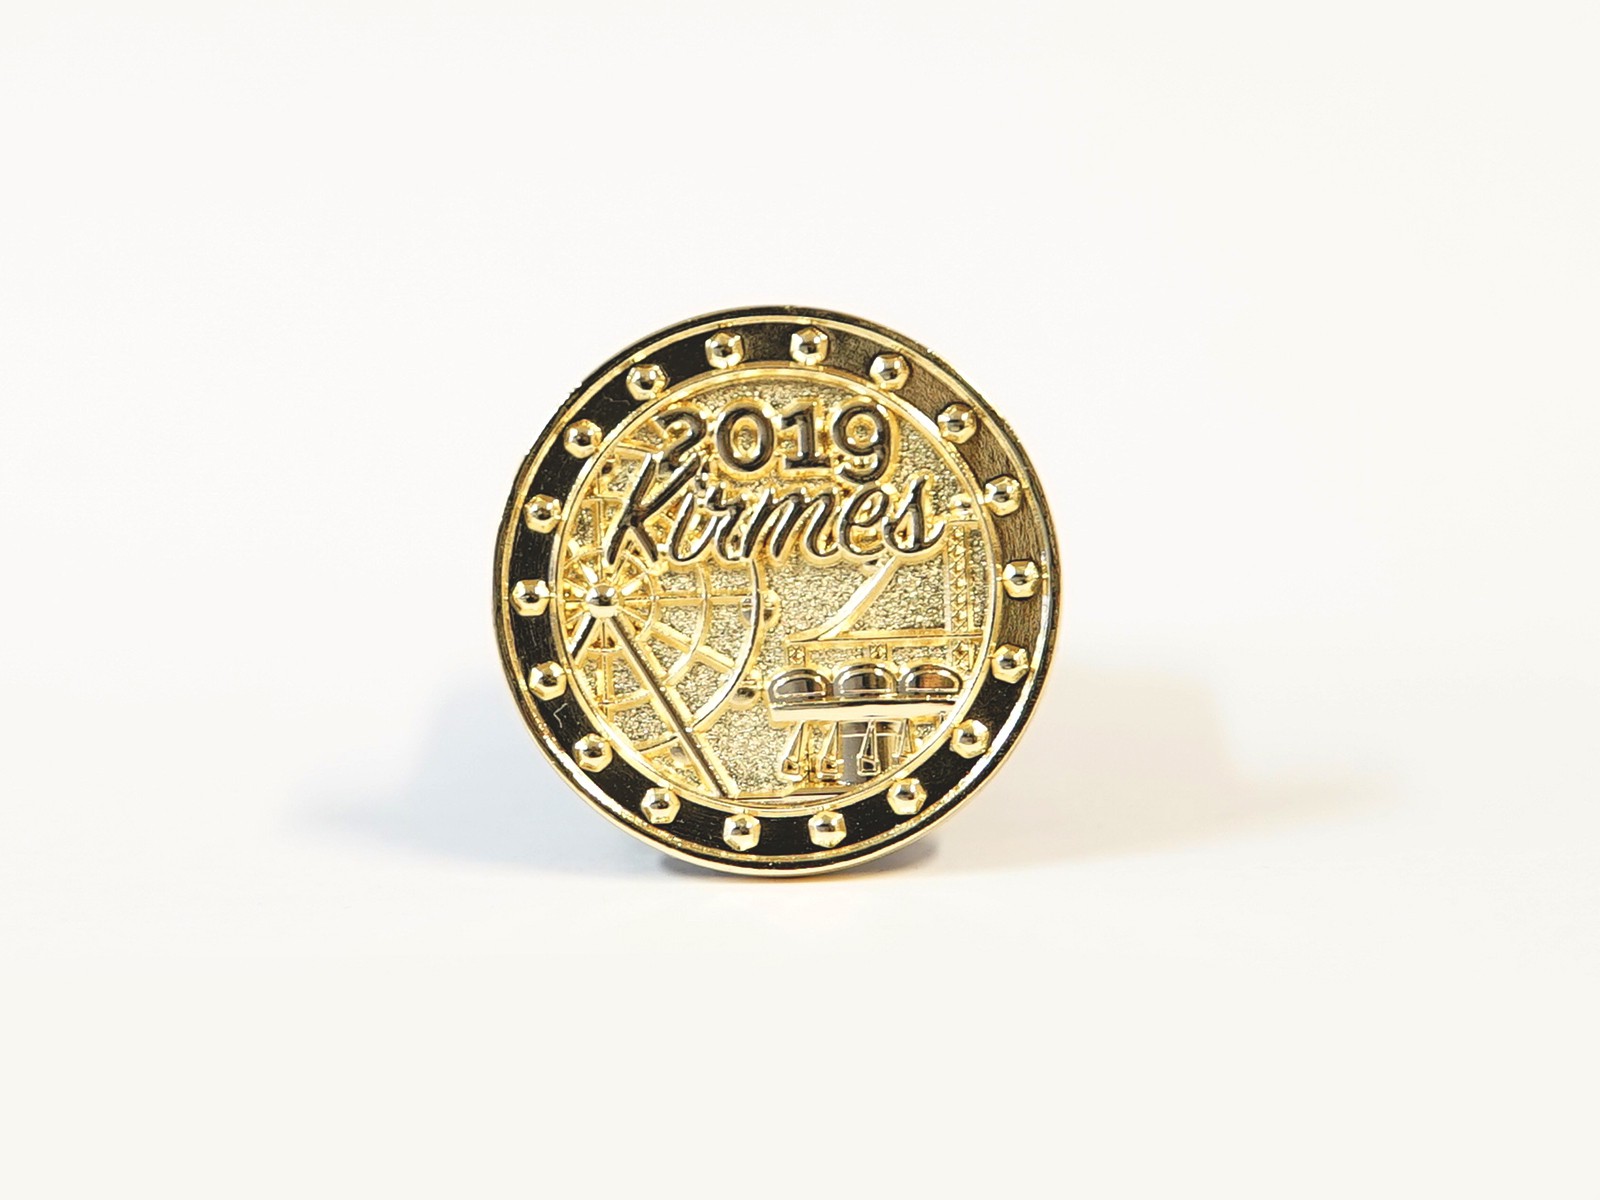 Miniatur Wunderland Coin "2019 Kirmes"